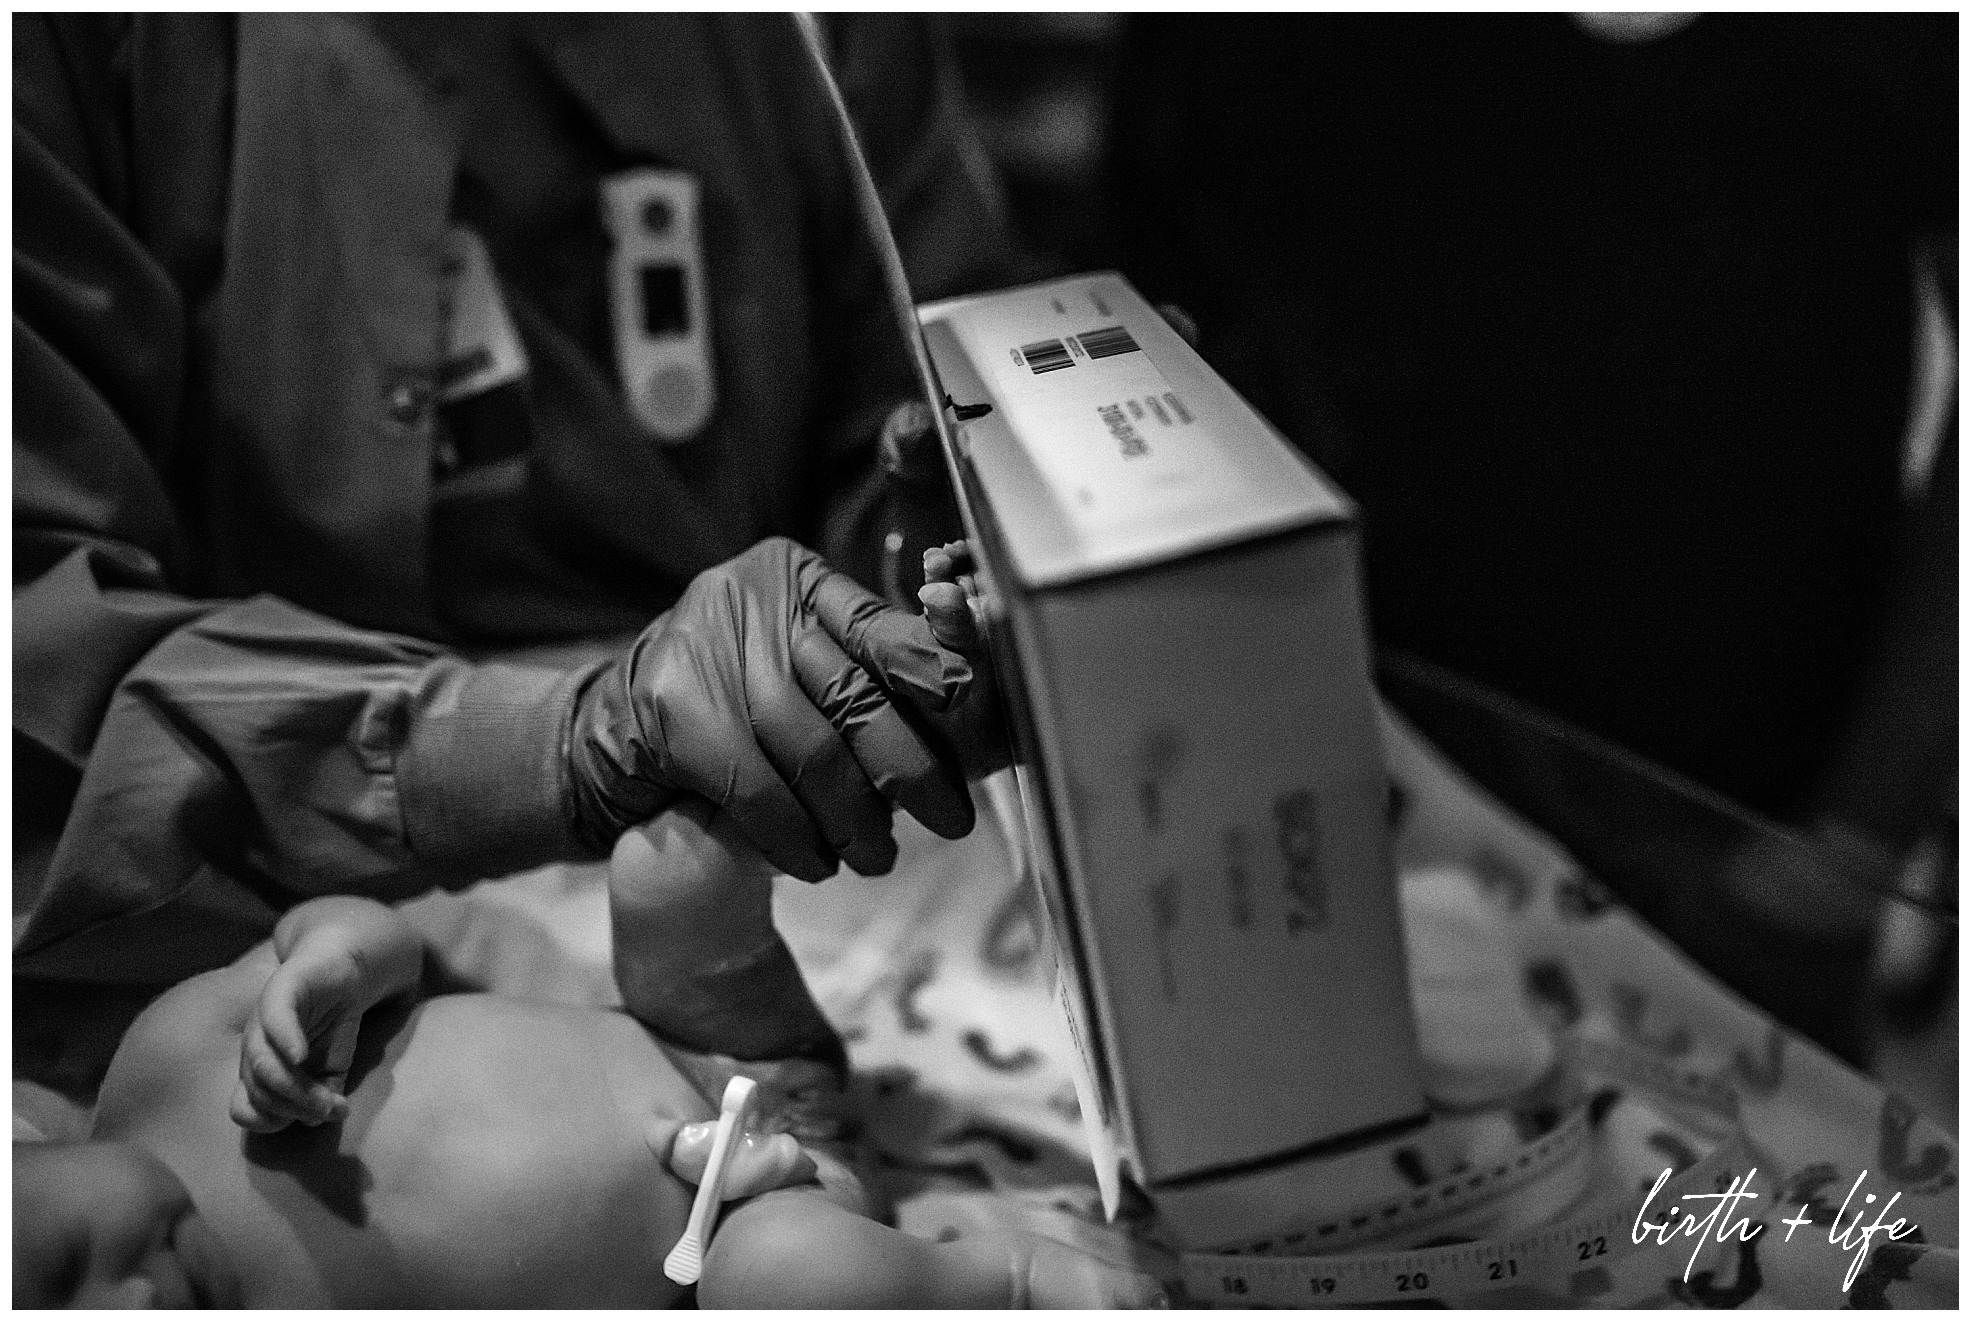 dfw-birth-and-life-photography-family-photojournalism-documentary-birth-storyacclaim-midwives-clark040.jpg